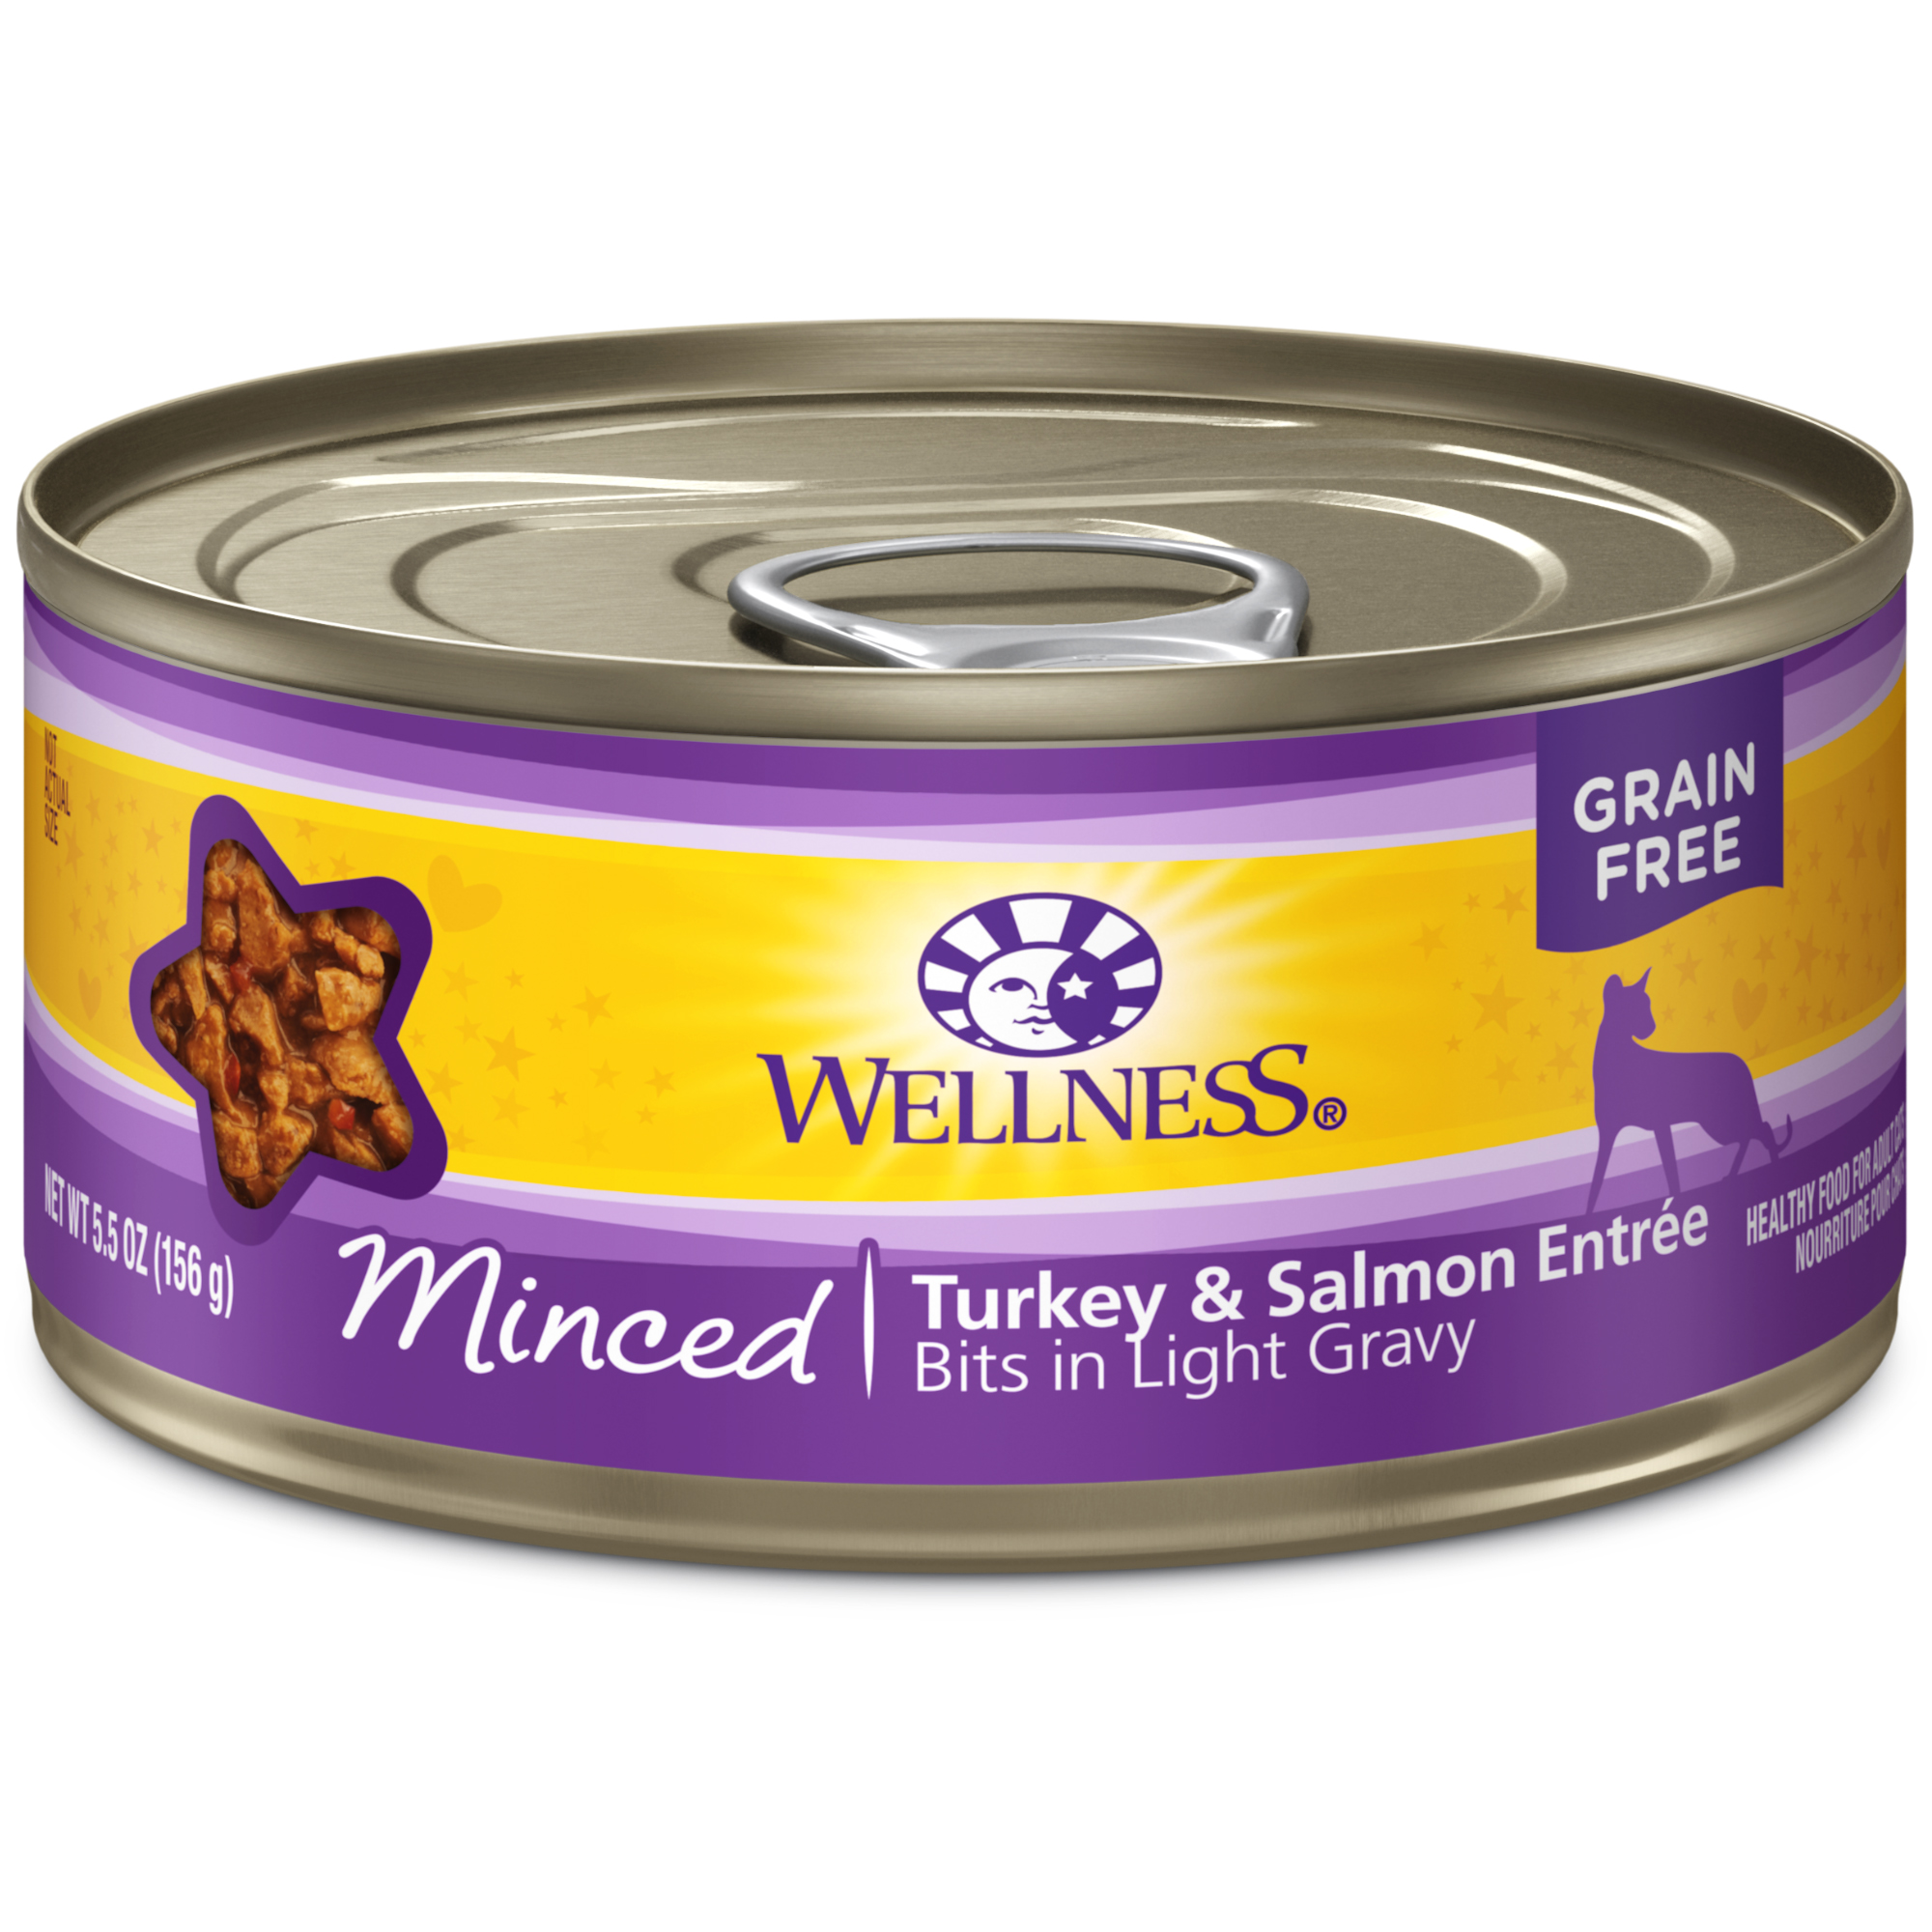 Wellness Complete Health Minced Minced Turkey & Salmon Entree